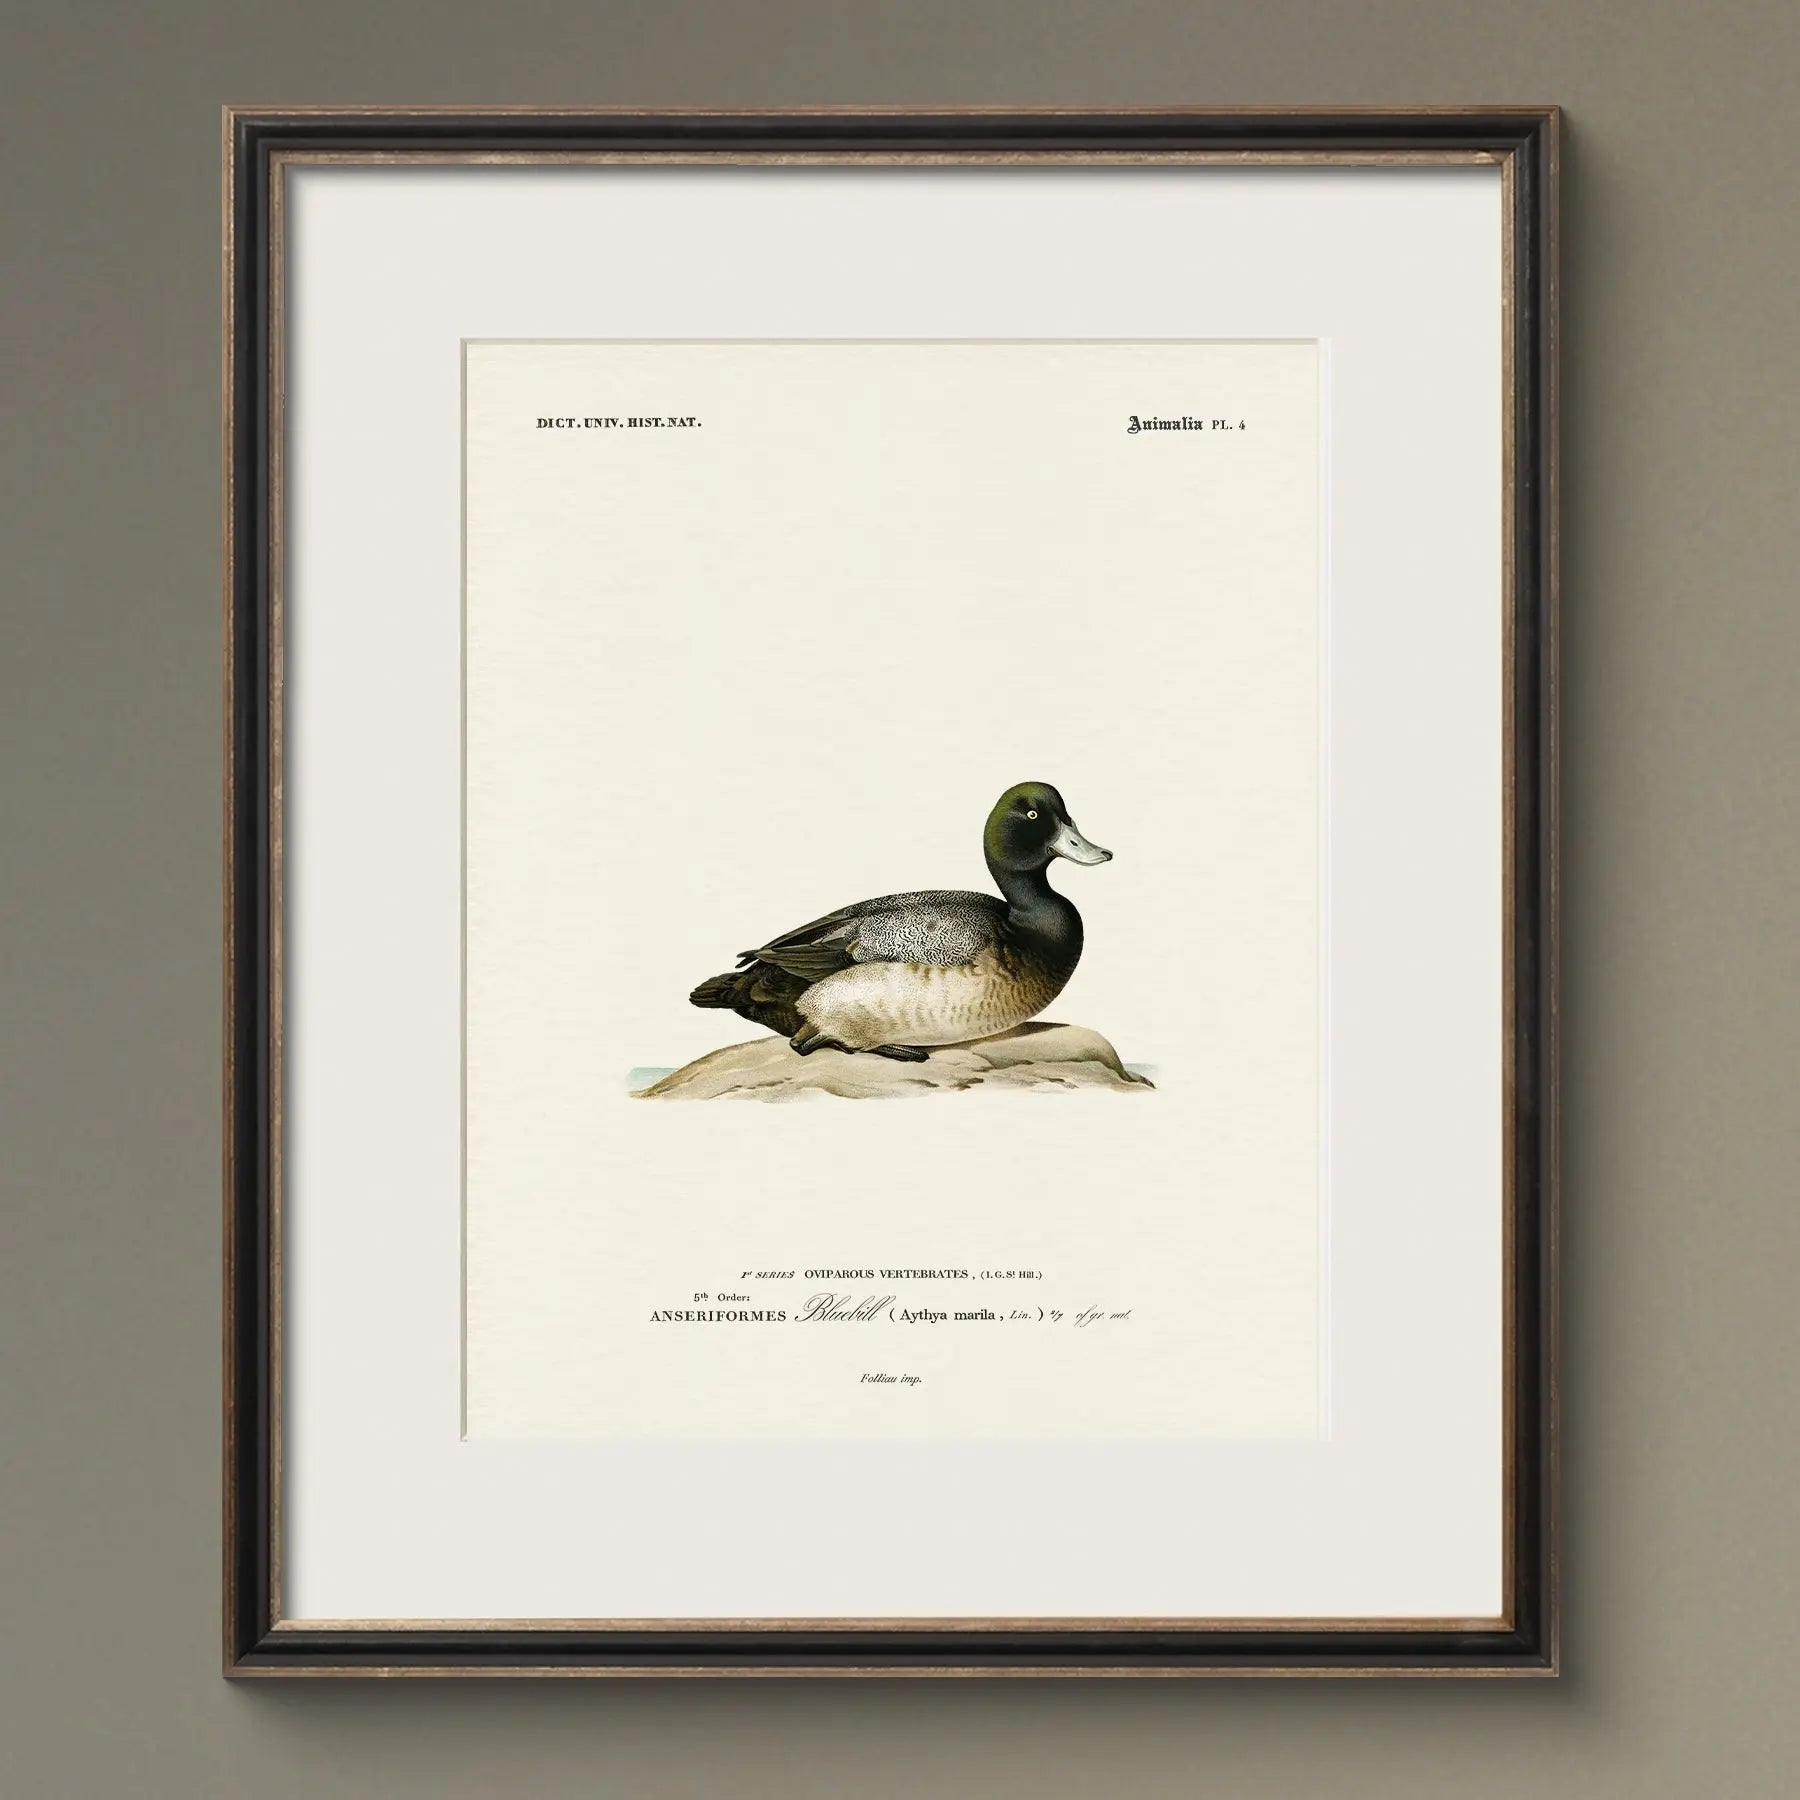 Vintage Naturalist Illustrations: North American Ducks - Emblem Atelier